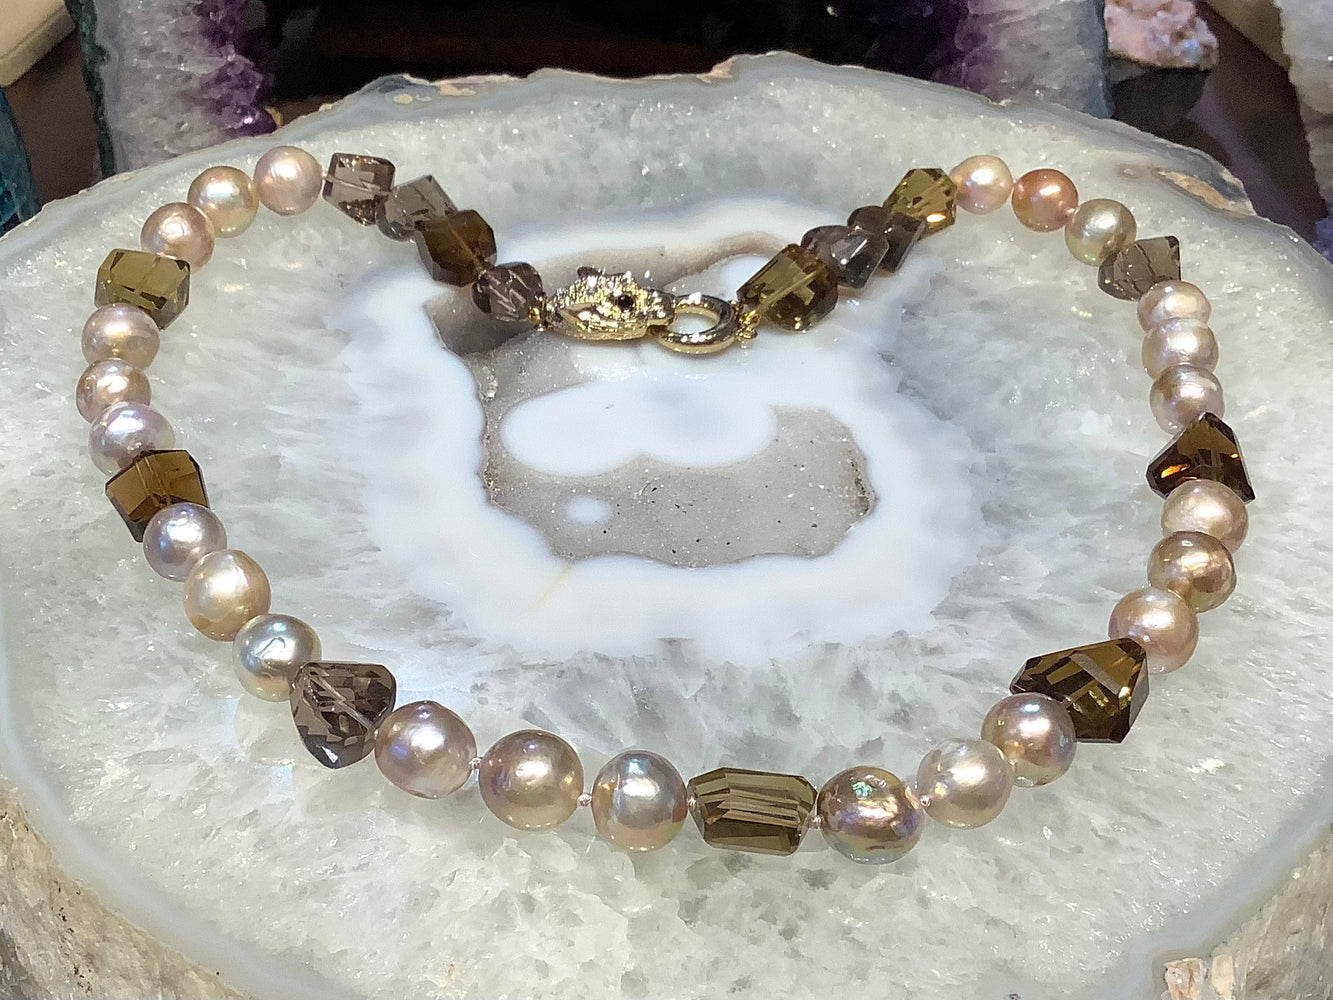 Incredible natural pearl & smoky quartz necklace